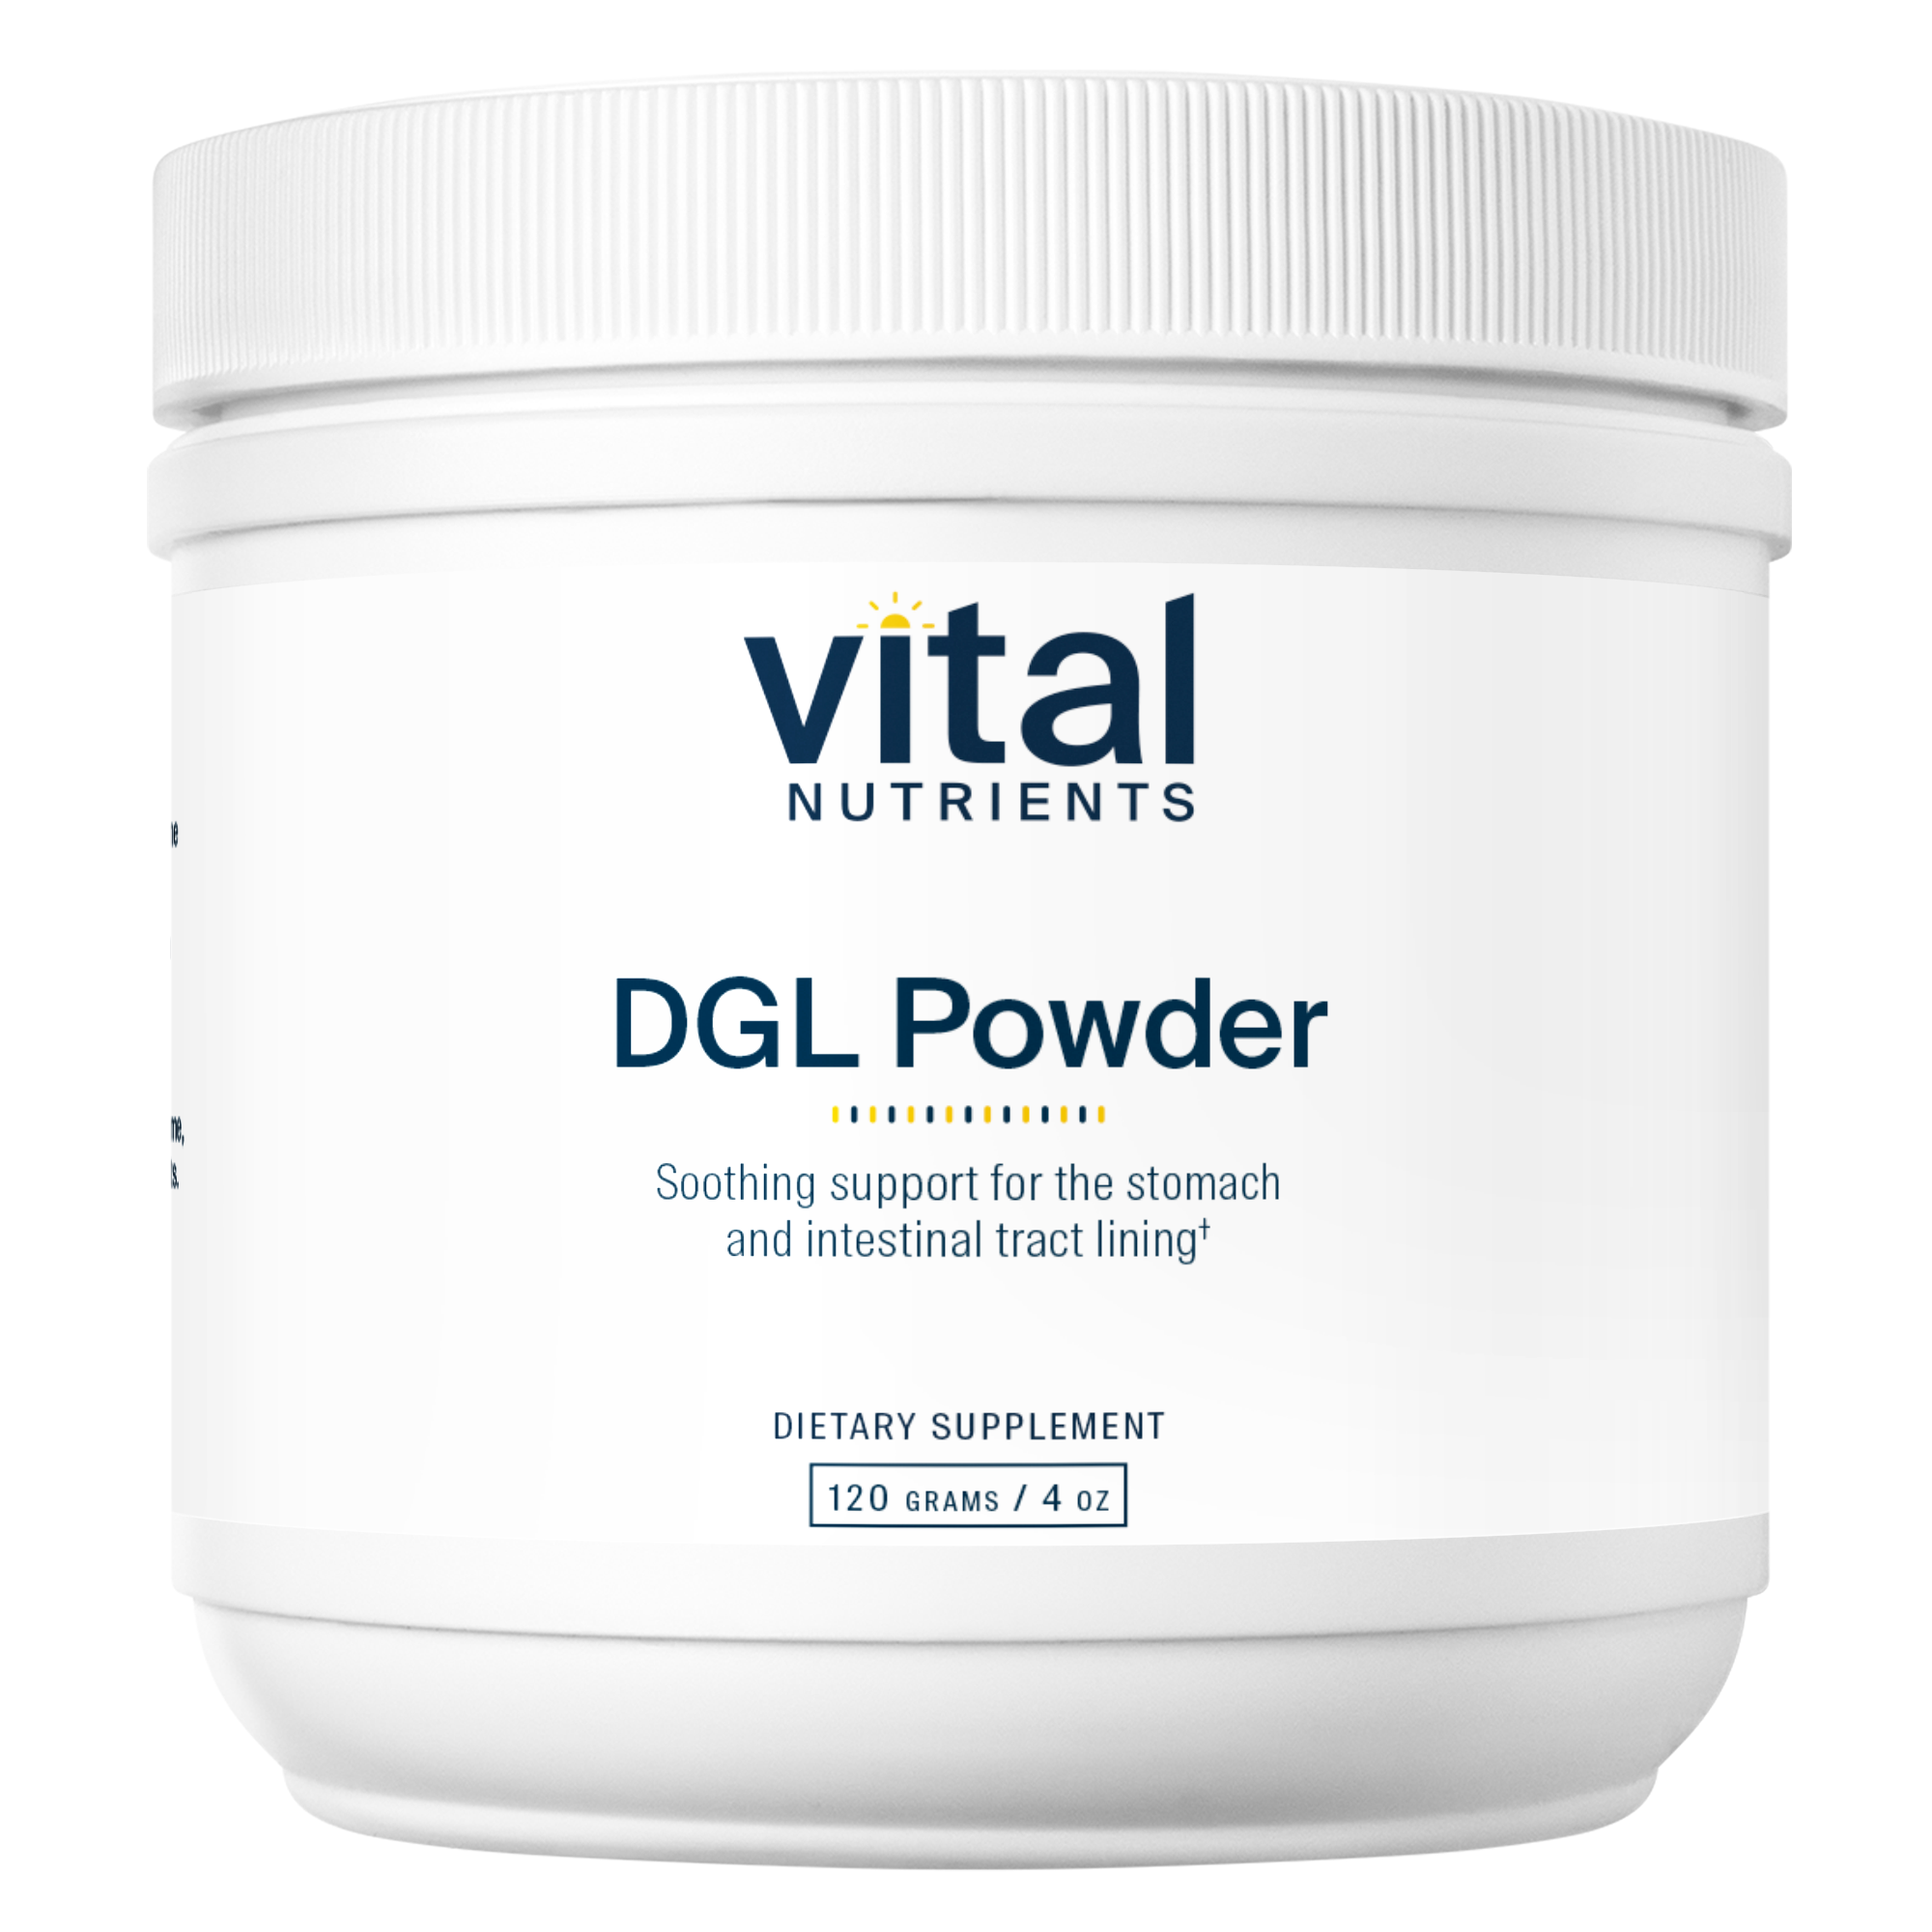 DGL Powder (Deglycyrrhizinated Licorice) - 120g | Vital Nutrients